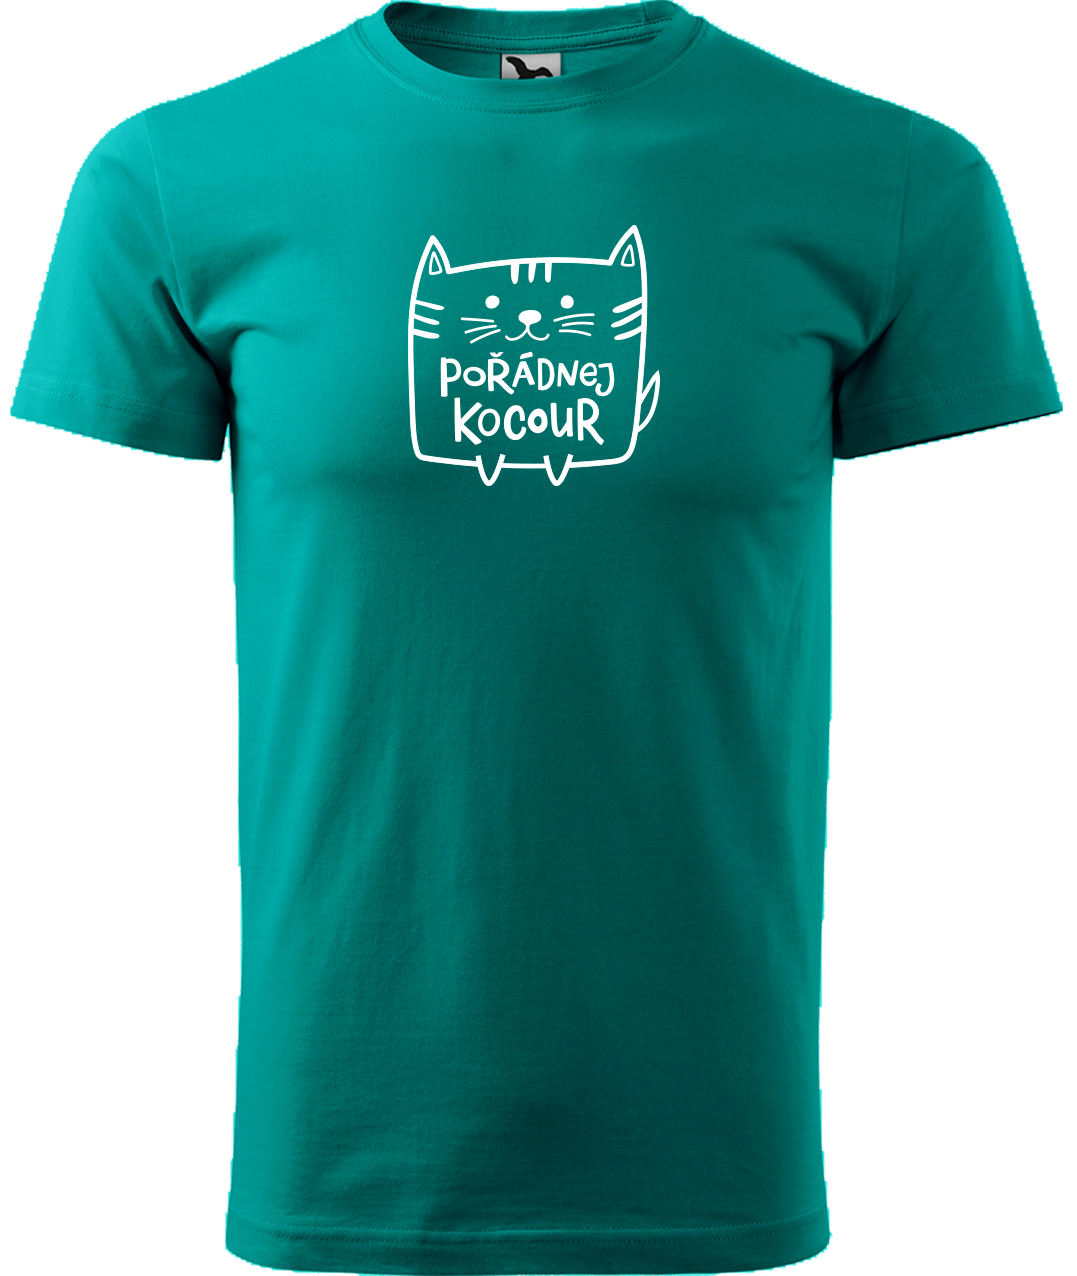 Pánské tričko s kočkou - Pořádnej kocour Velikost: S, Barva: Emerald (19)